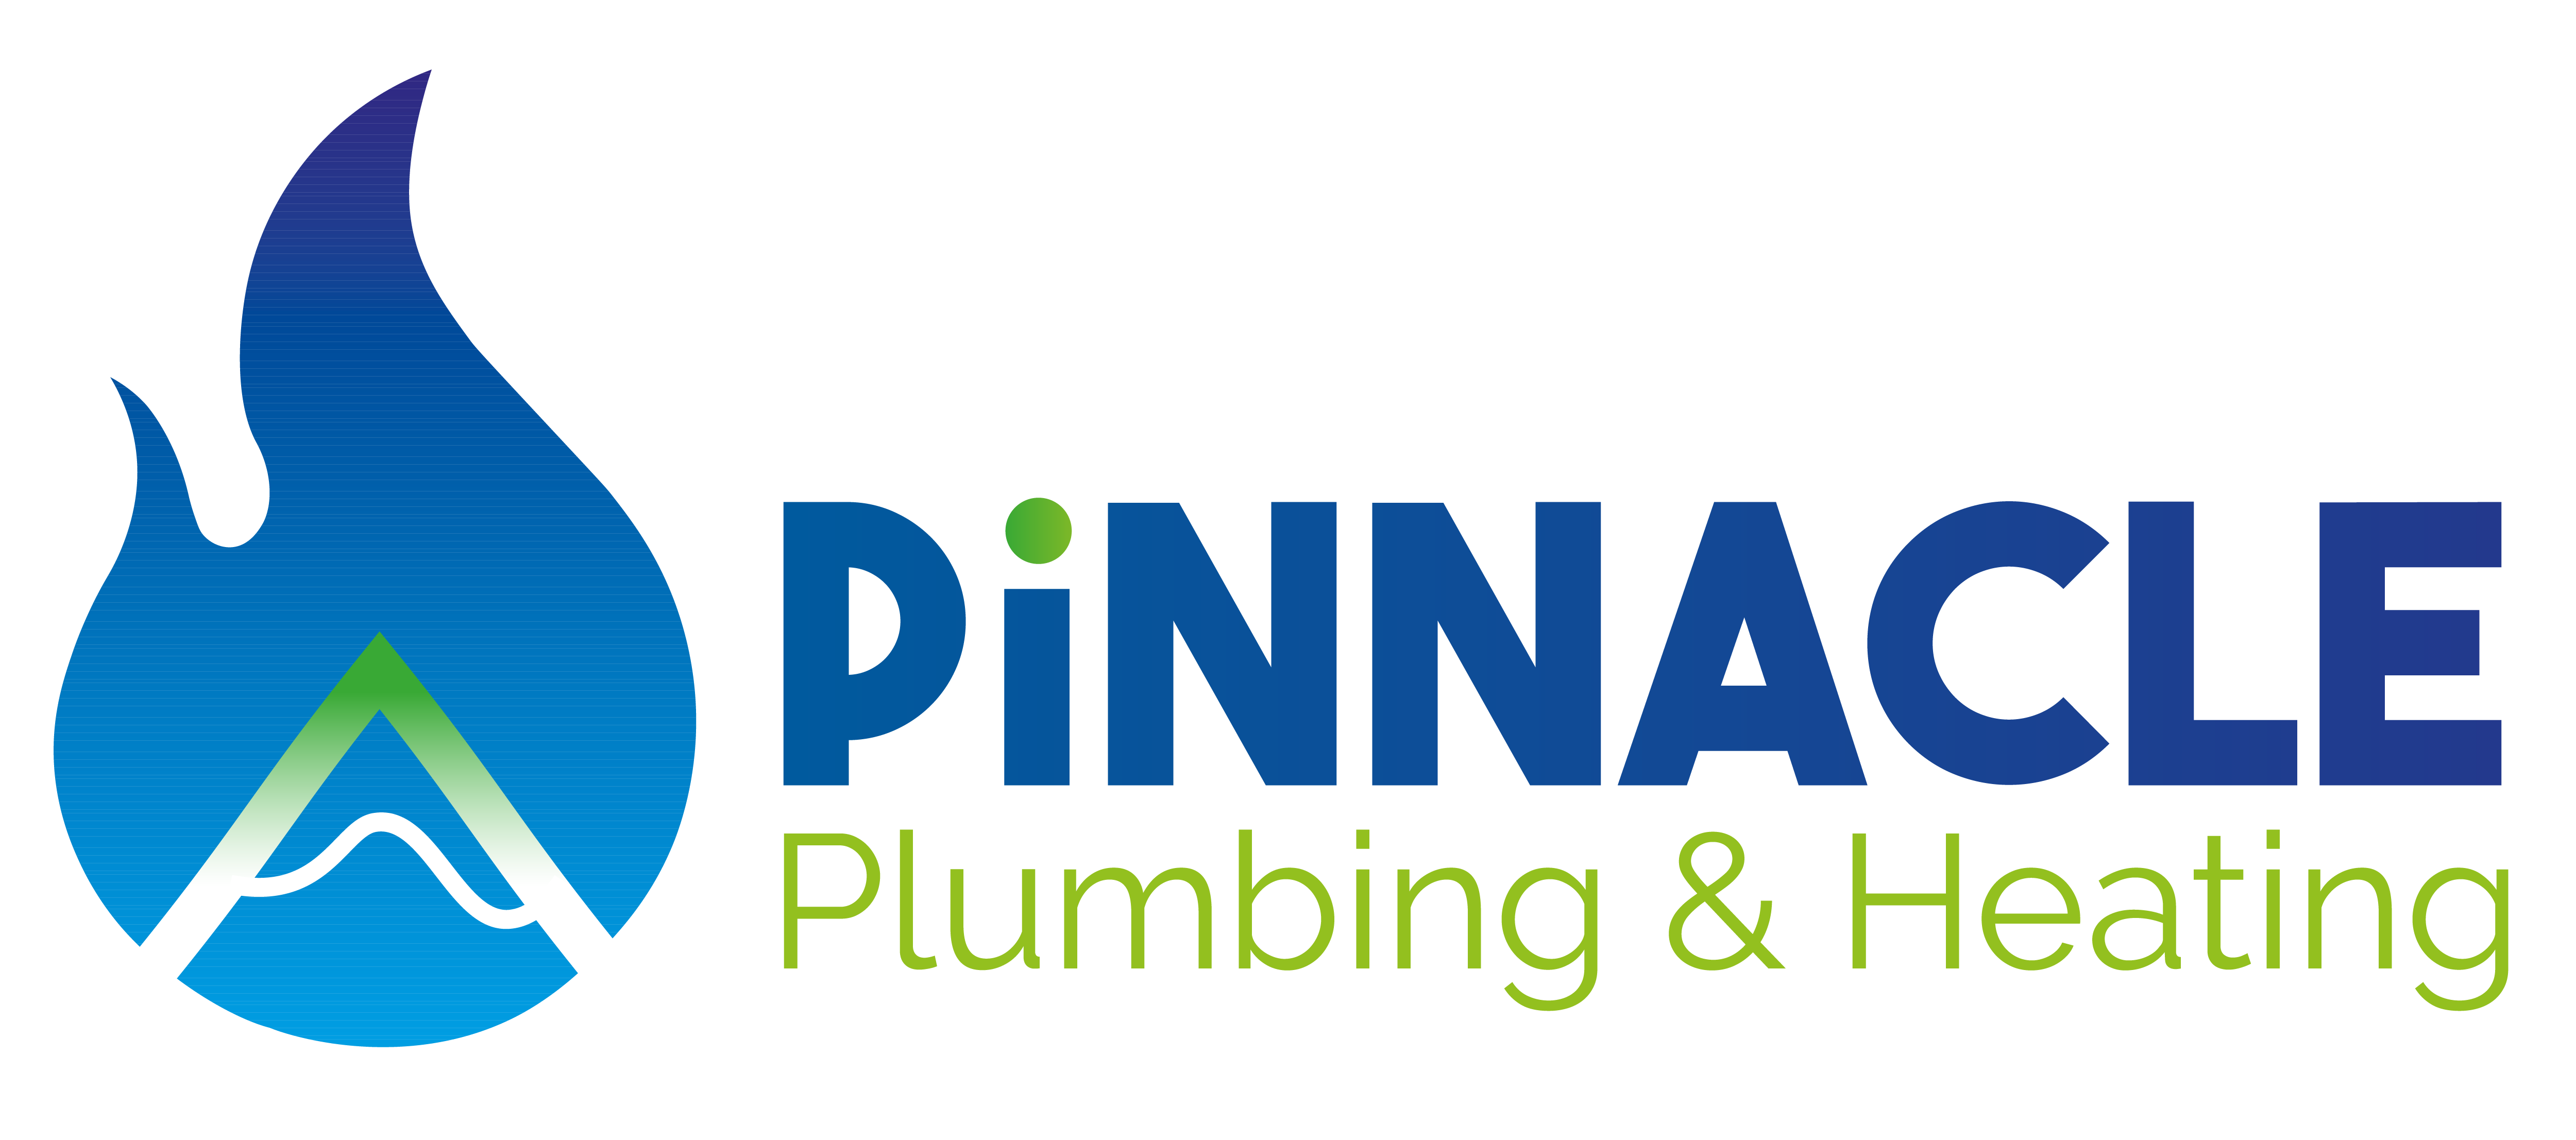 Pinnacle Plumbing and heating